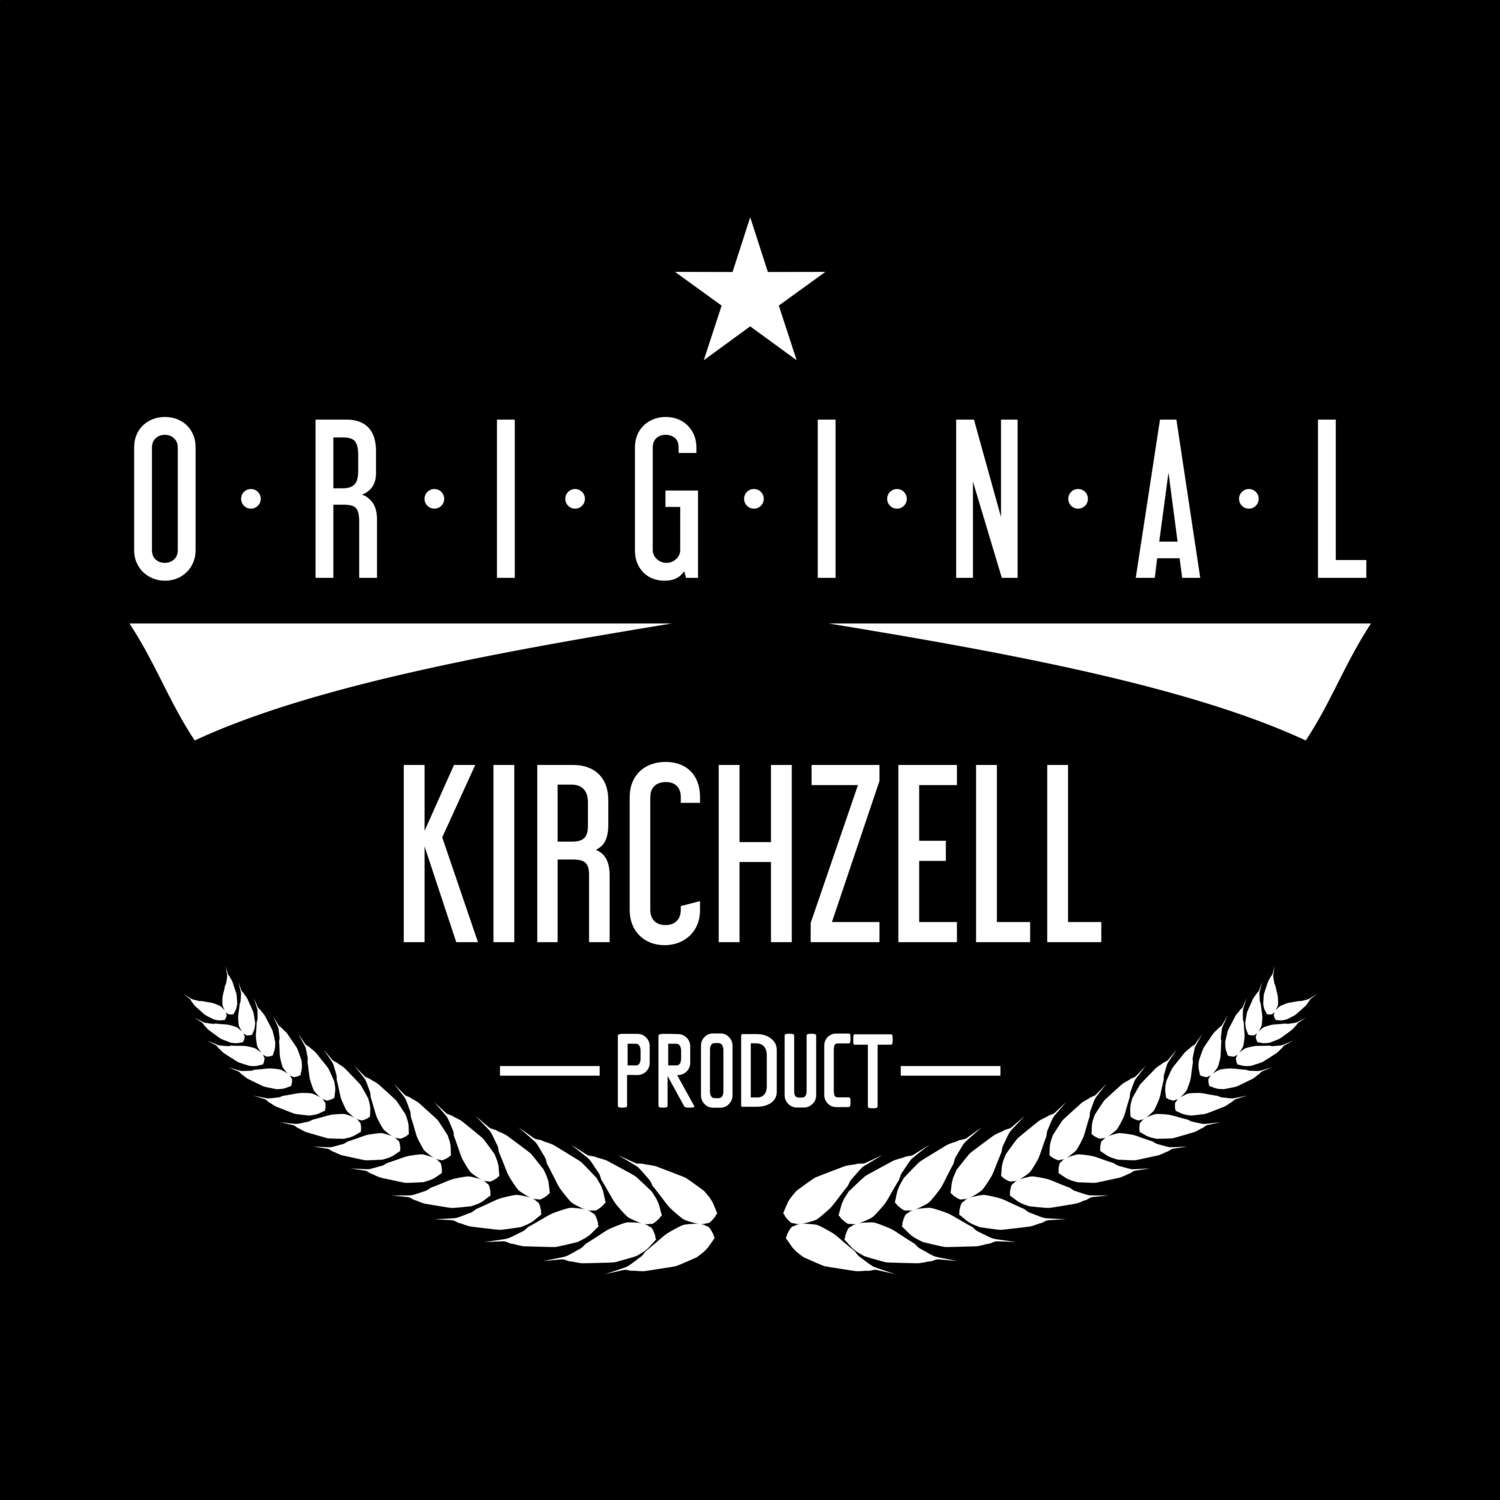 Kirchzell T-Shirt »Original Product«